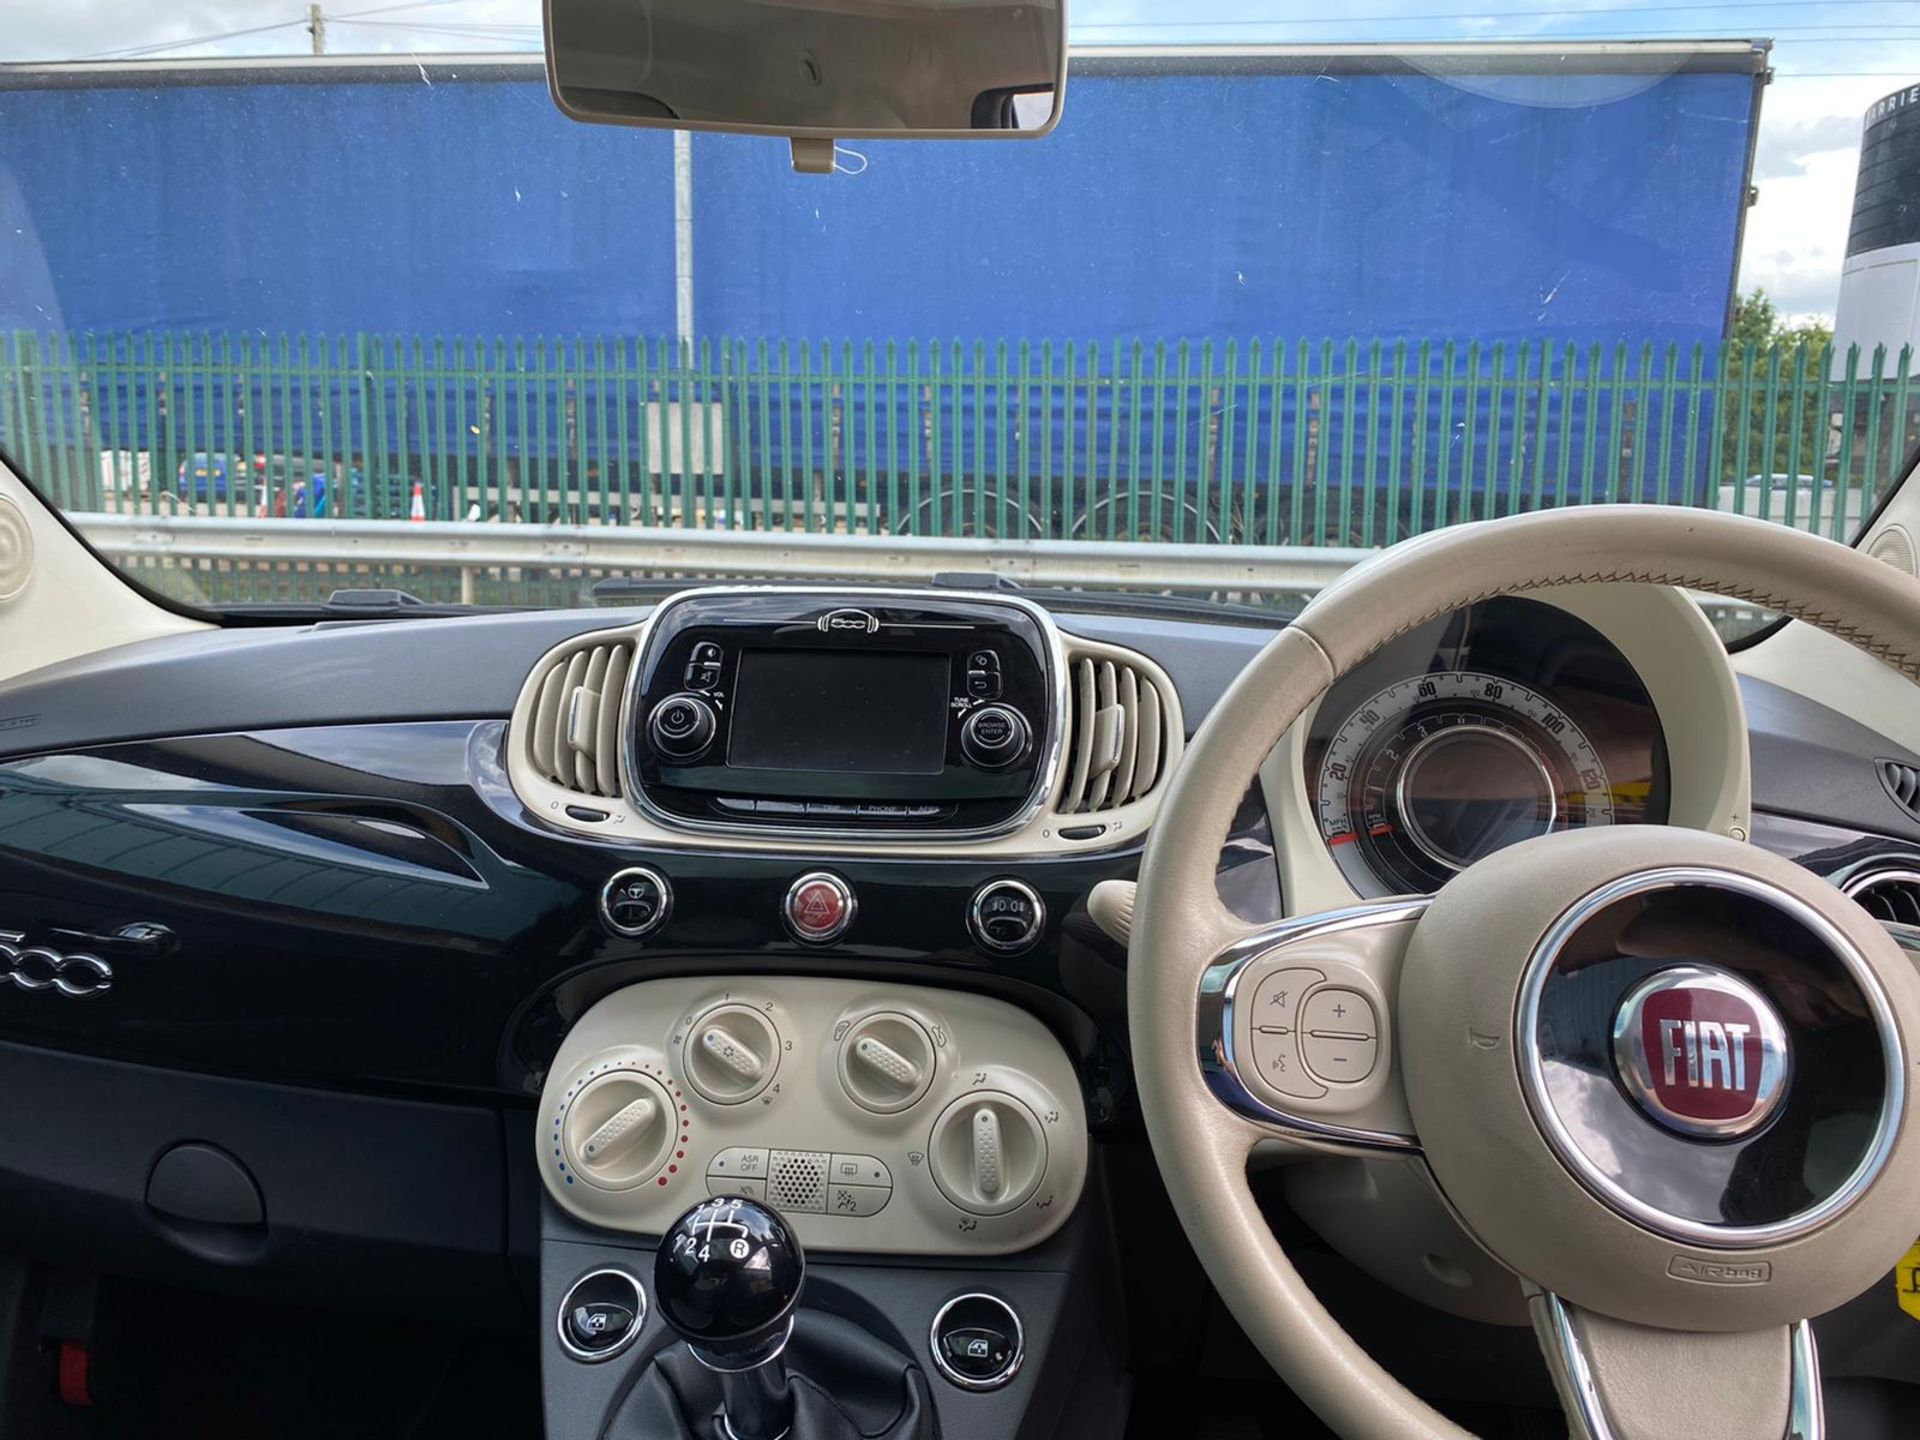 Fiat 500 1.2 Lounge - 2016 16 Reg - Parking Sensors - Panoramic Roof - ONLY 46K Miles - NO VAT! - Image 15 of 25